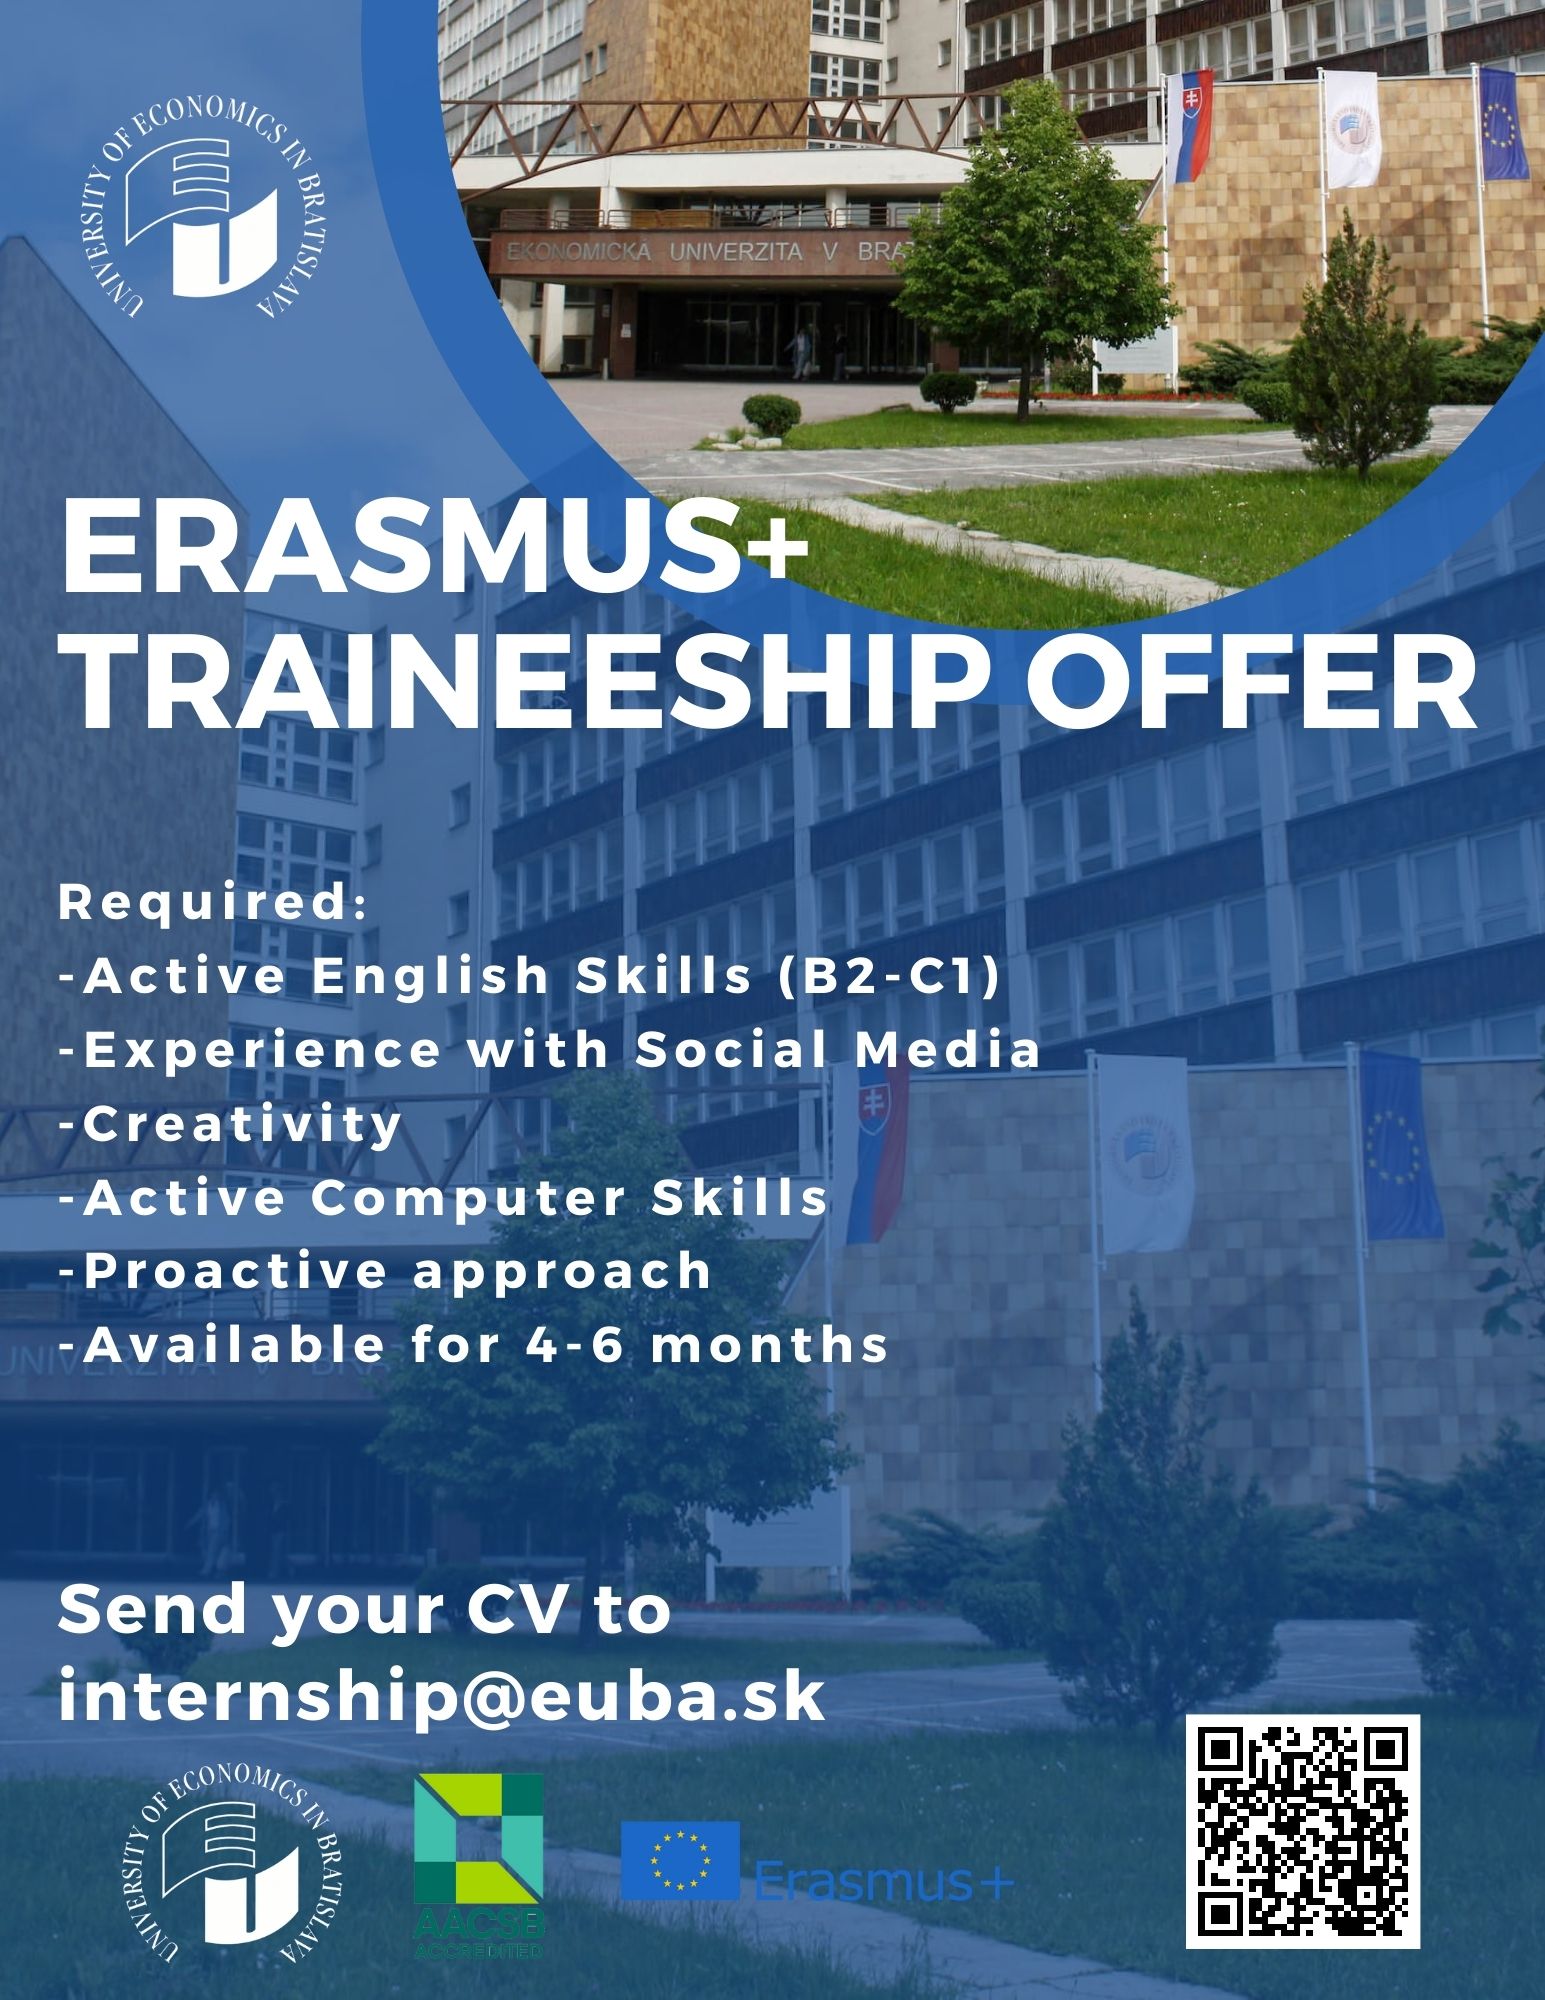 Internship/Traineeship offer at the University of Economics in Bratislava